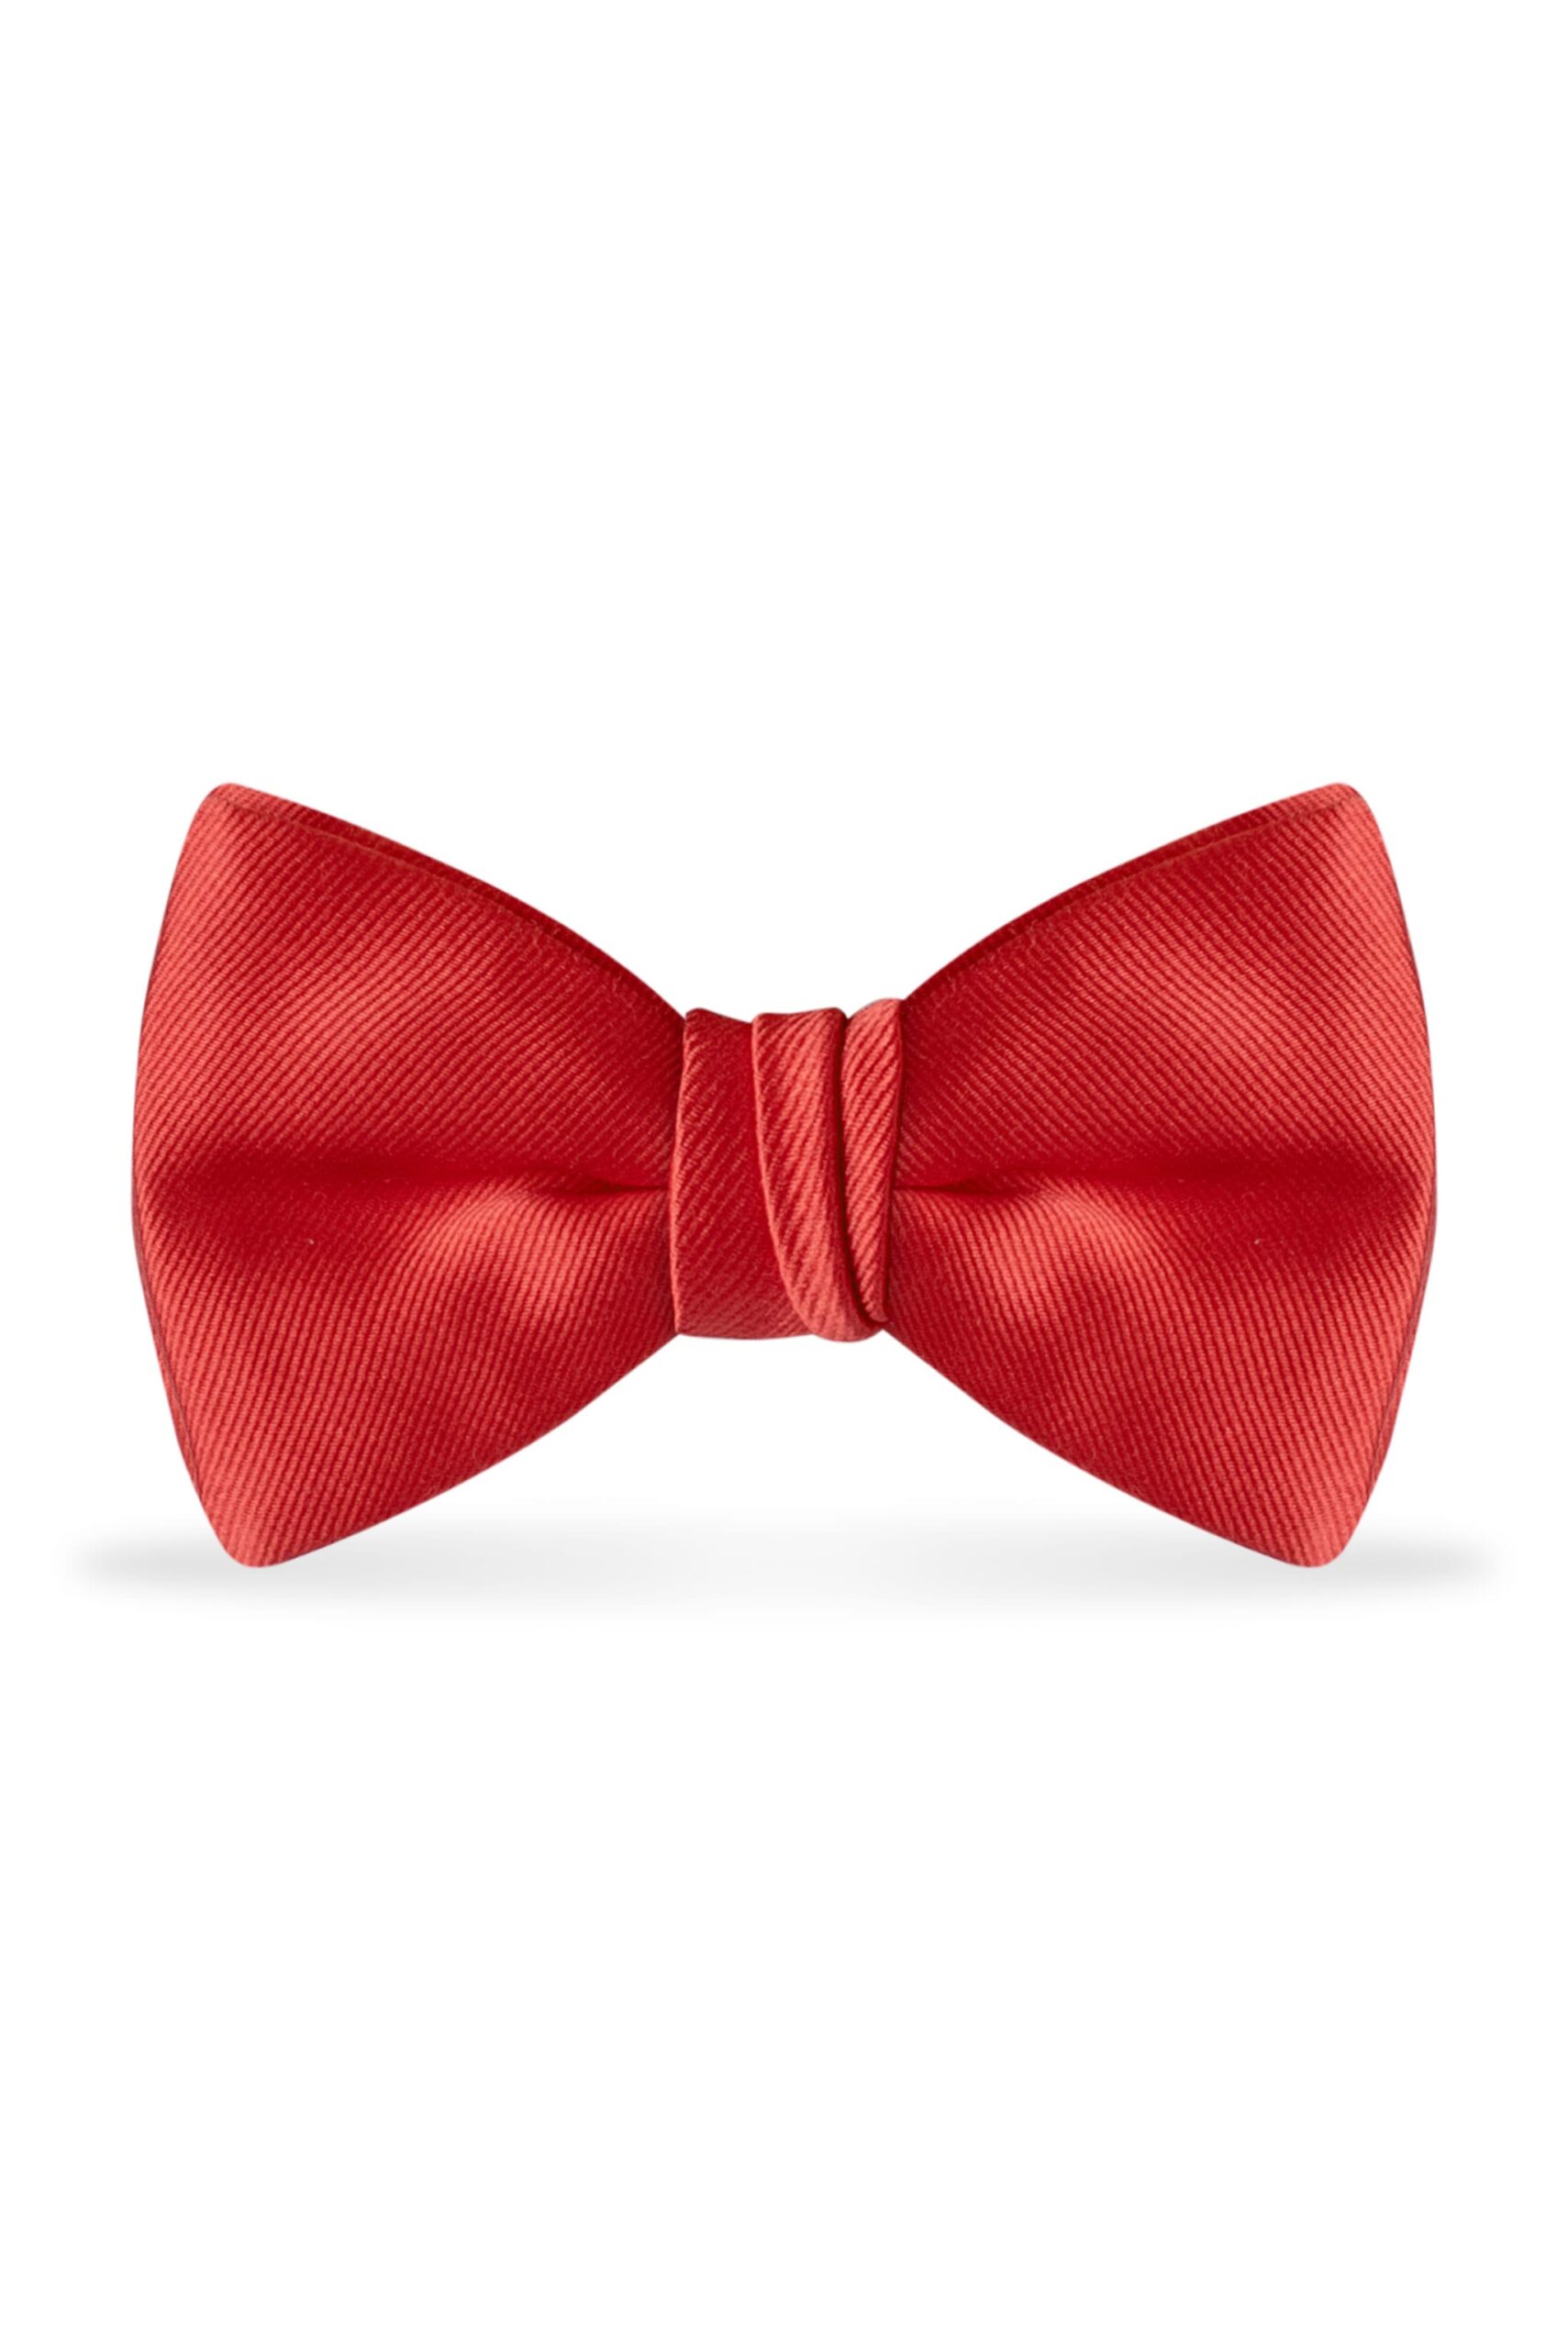 Solid Ferrari Red Bow Tie